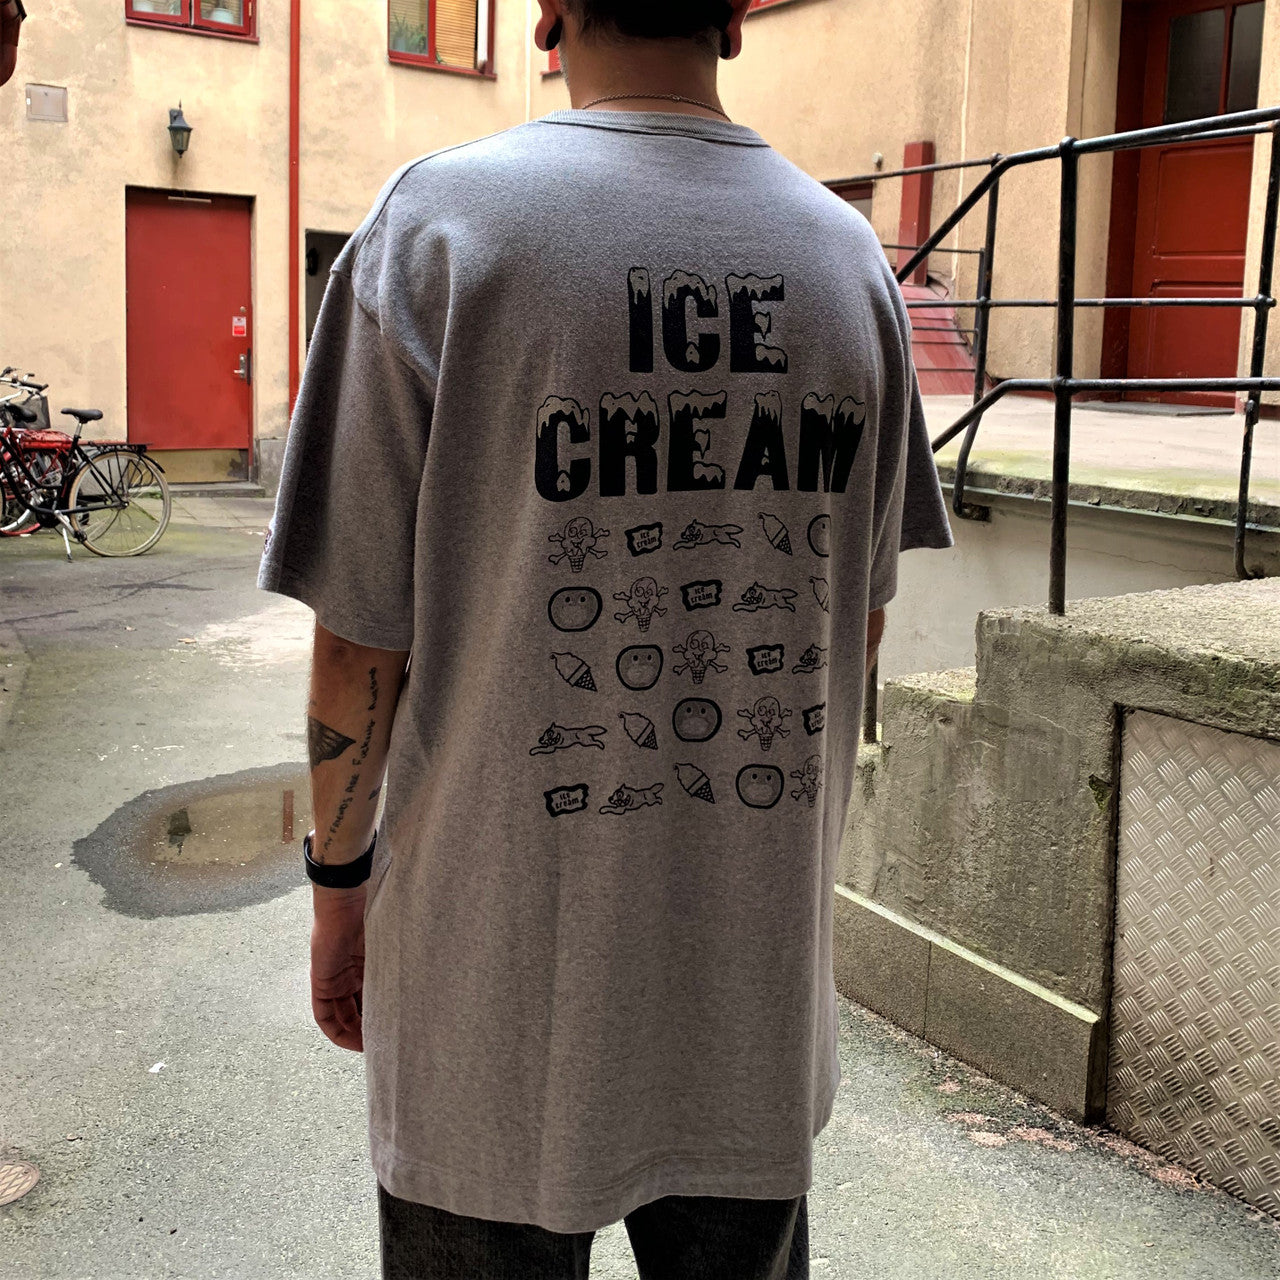 BBC Ice Cream Made in Japan Tshirt